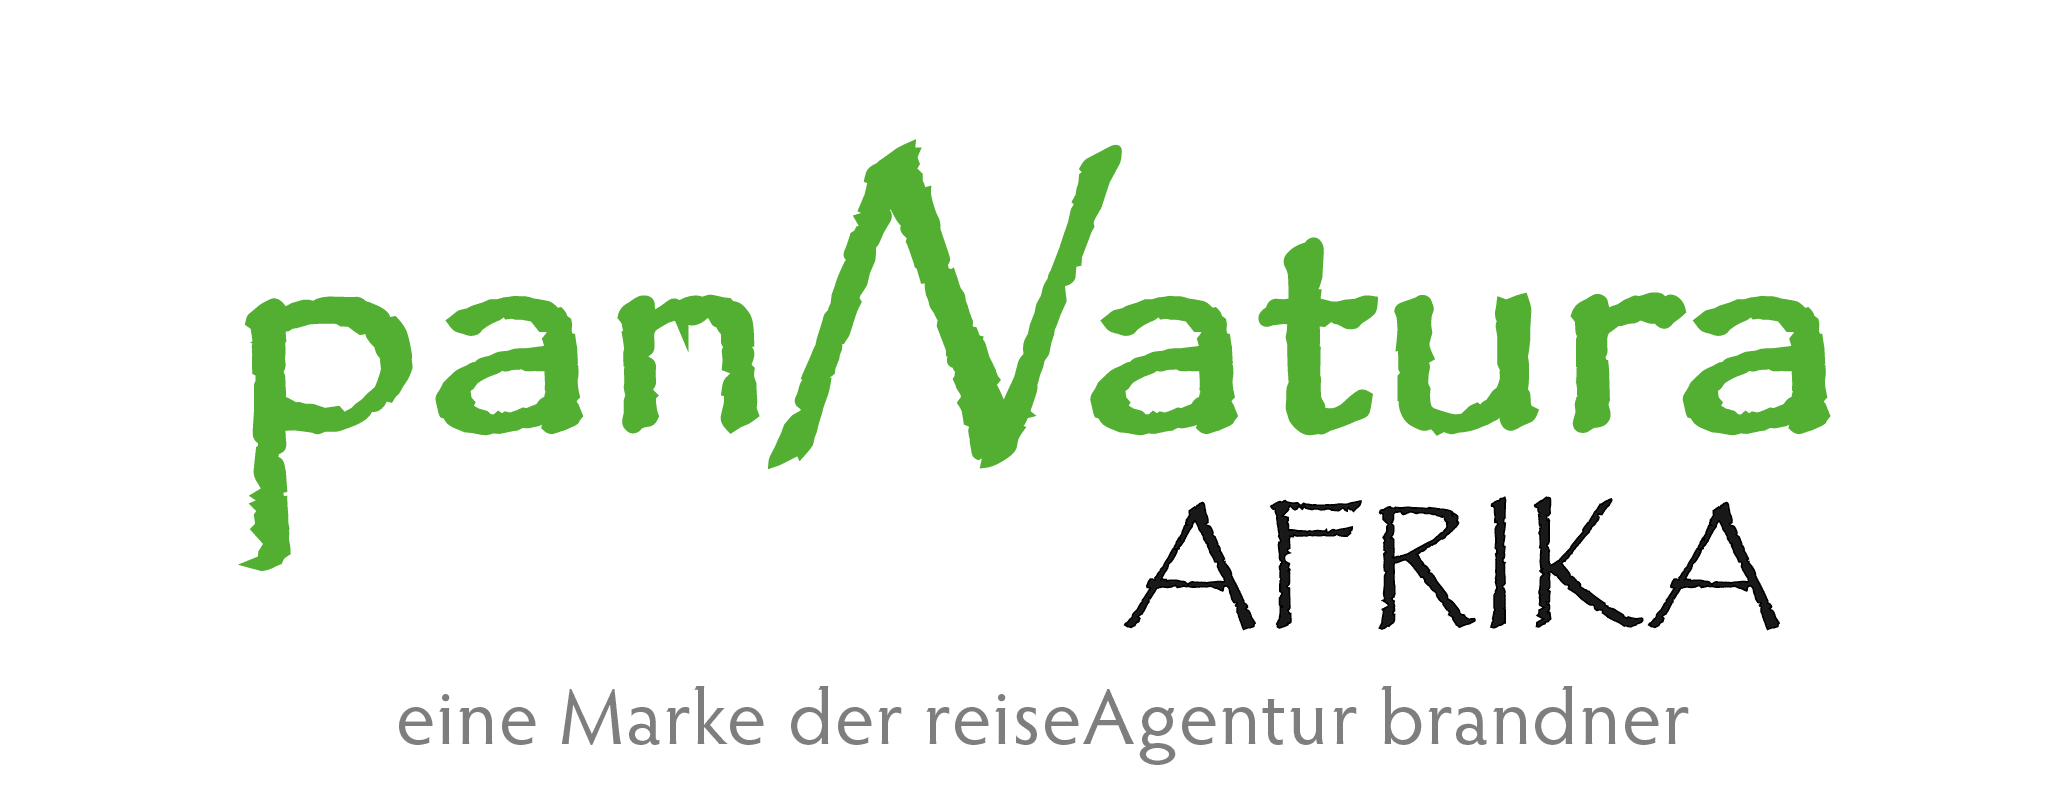 trails-trailsreisen-wanderreise-naturreise-gruppenreise-aktivreise-logo-pannatura-afrika2